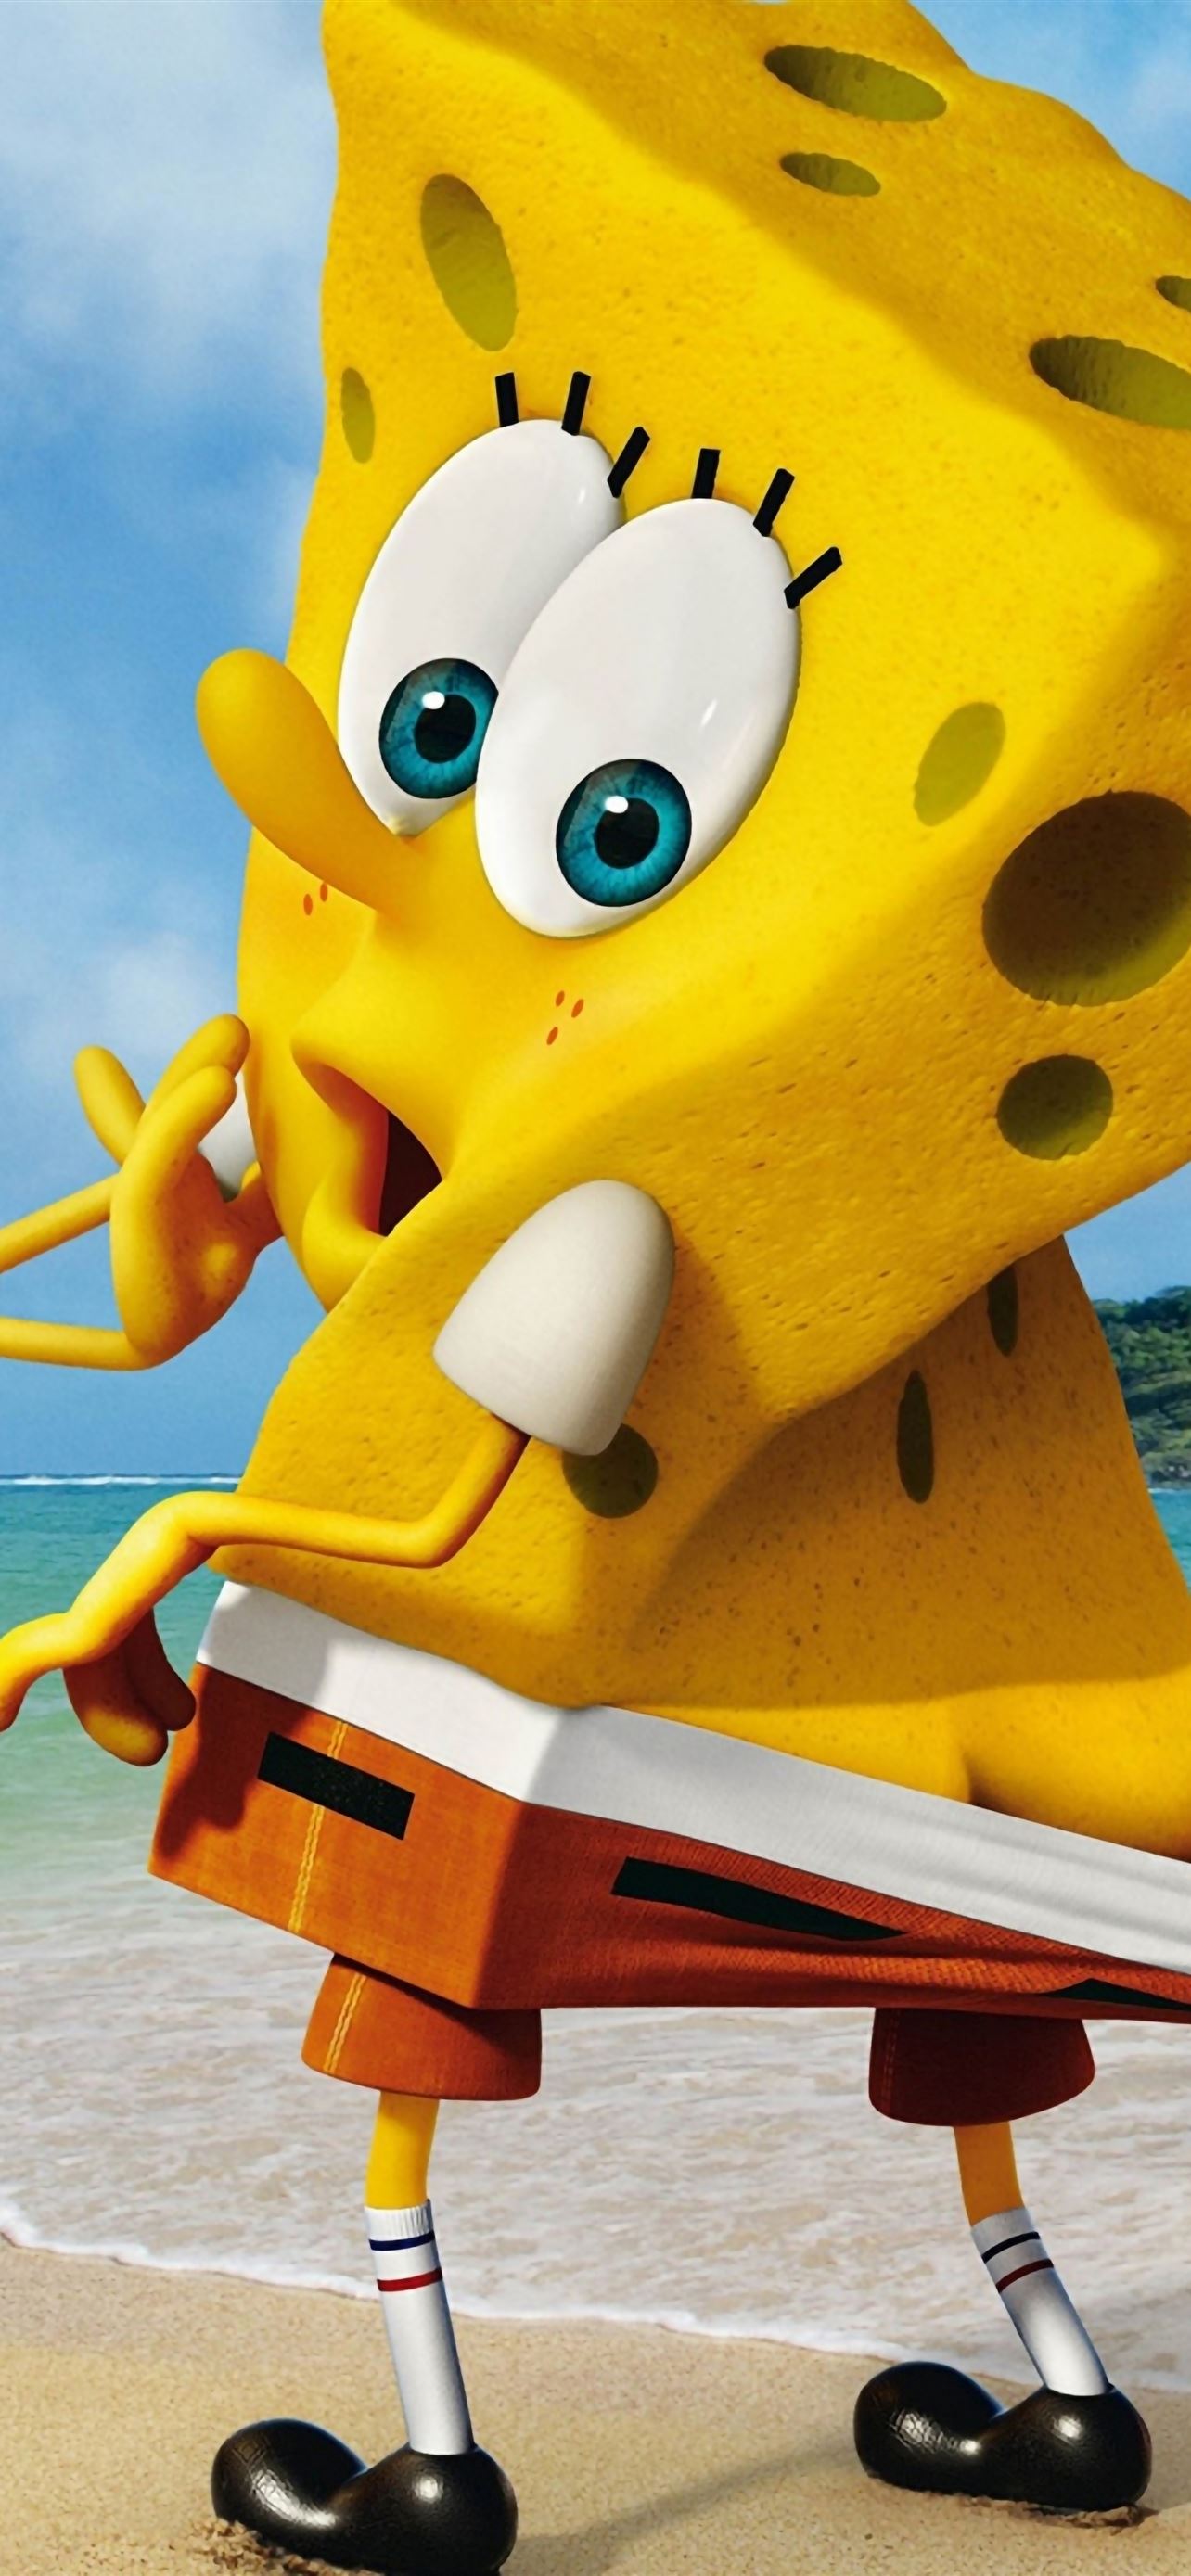 Funny Spongebob Squarepants iPhone